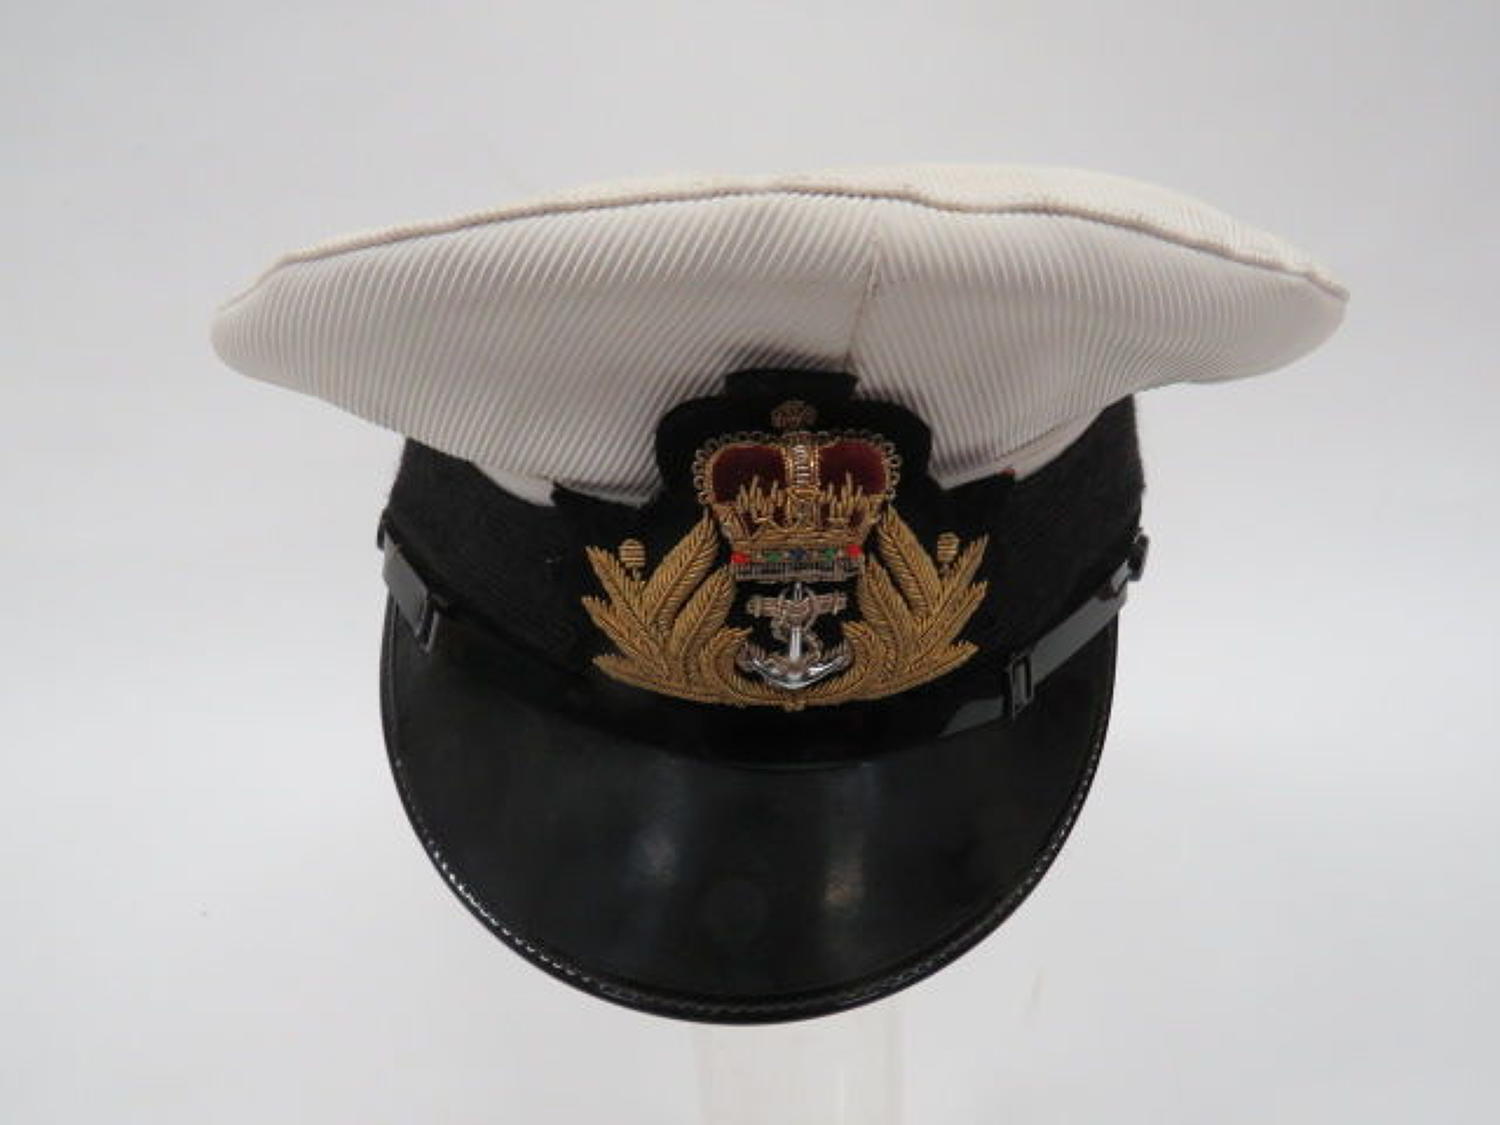 Post 1953 Royal Navy Officer's Service Dress Cap